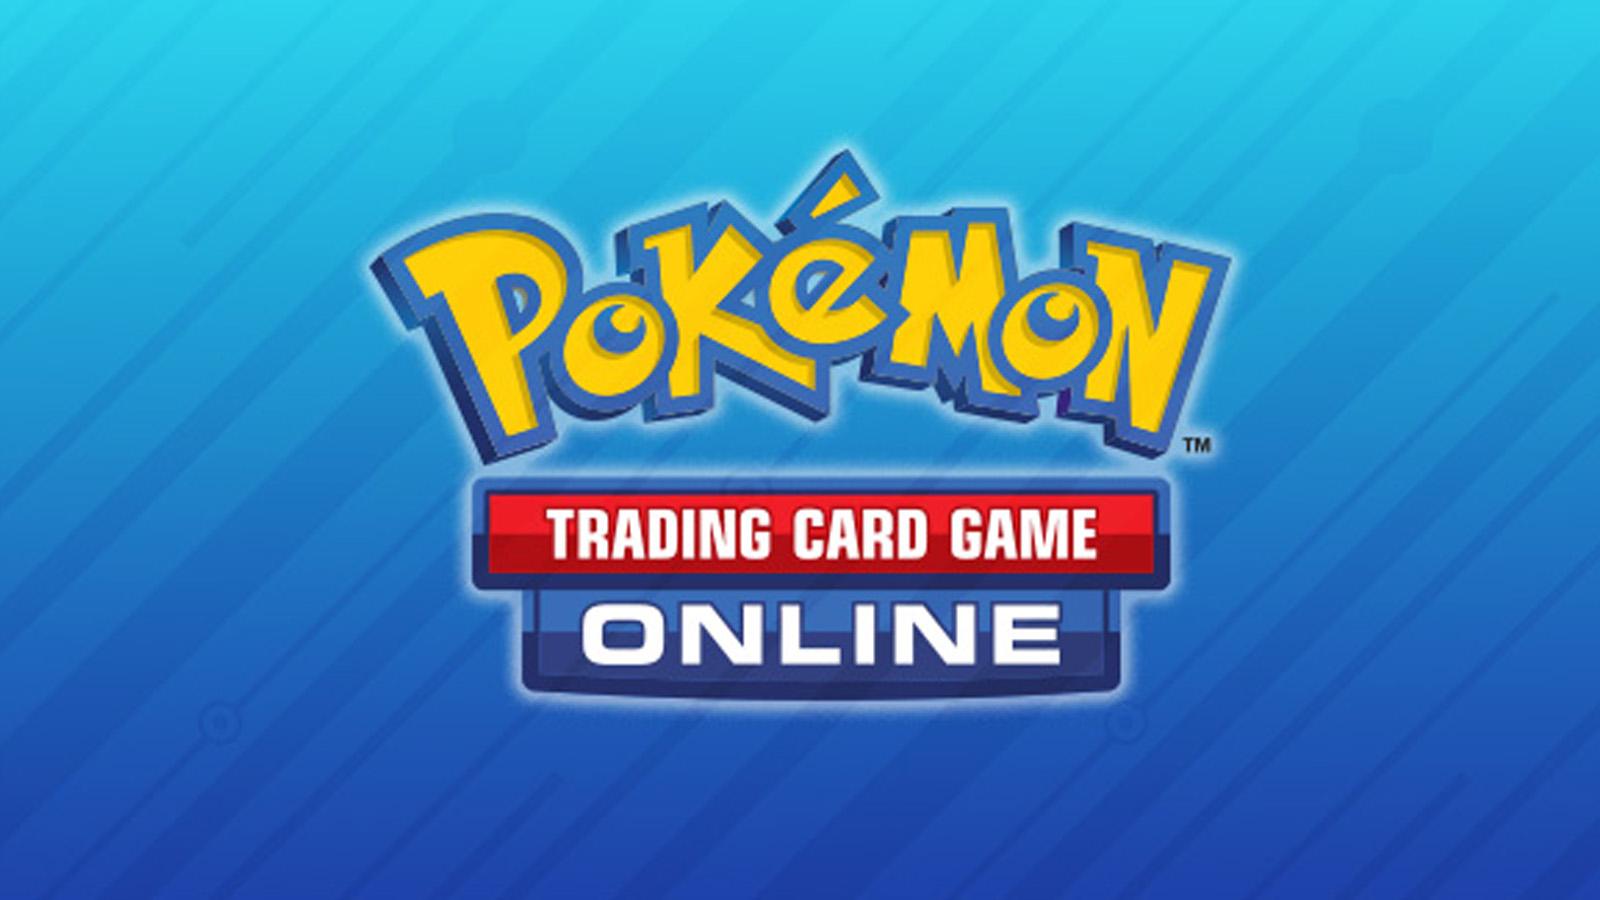 Pokémon Trading Card Game Online - Twitch